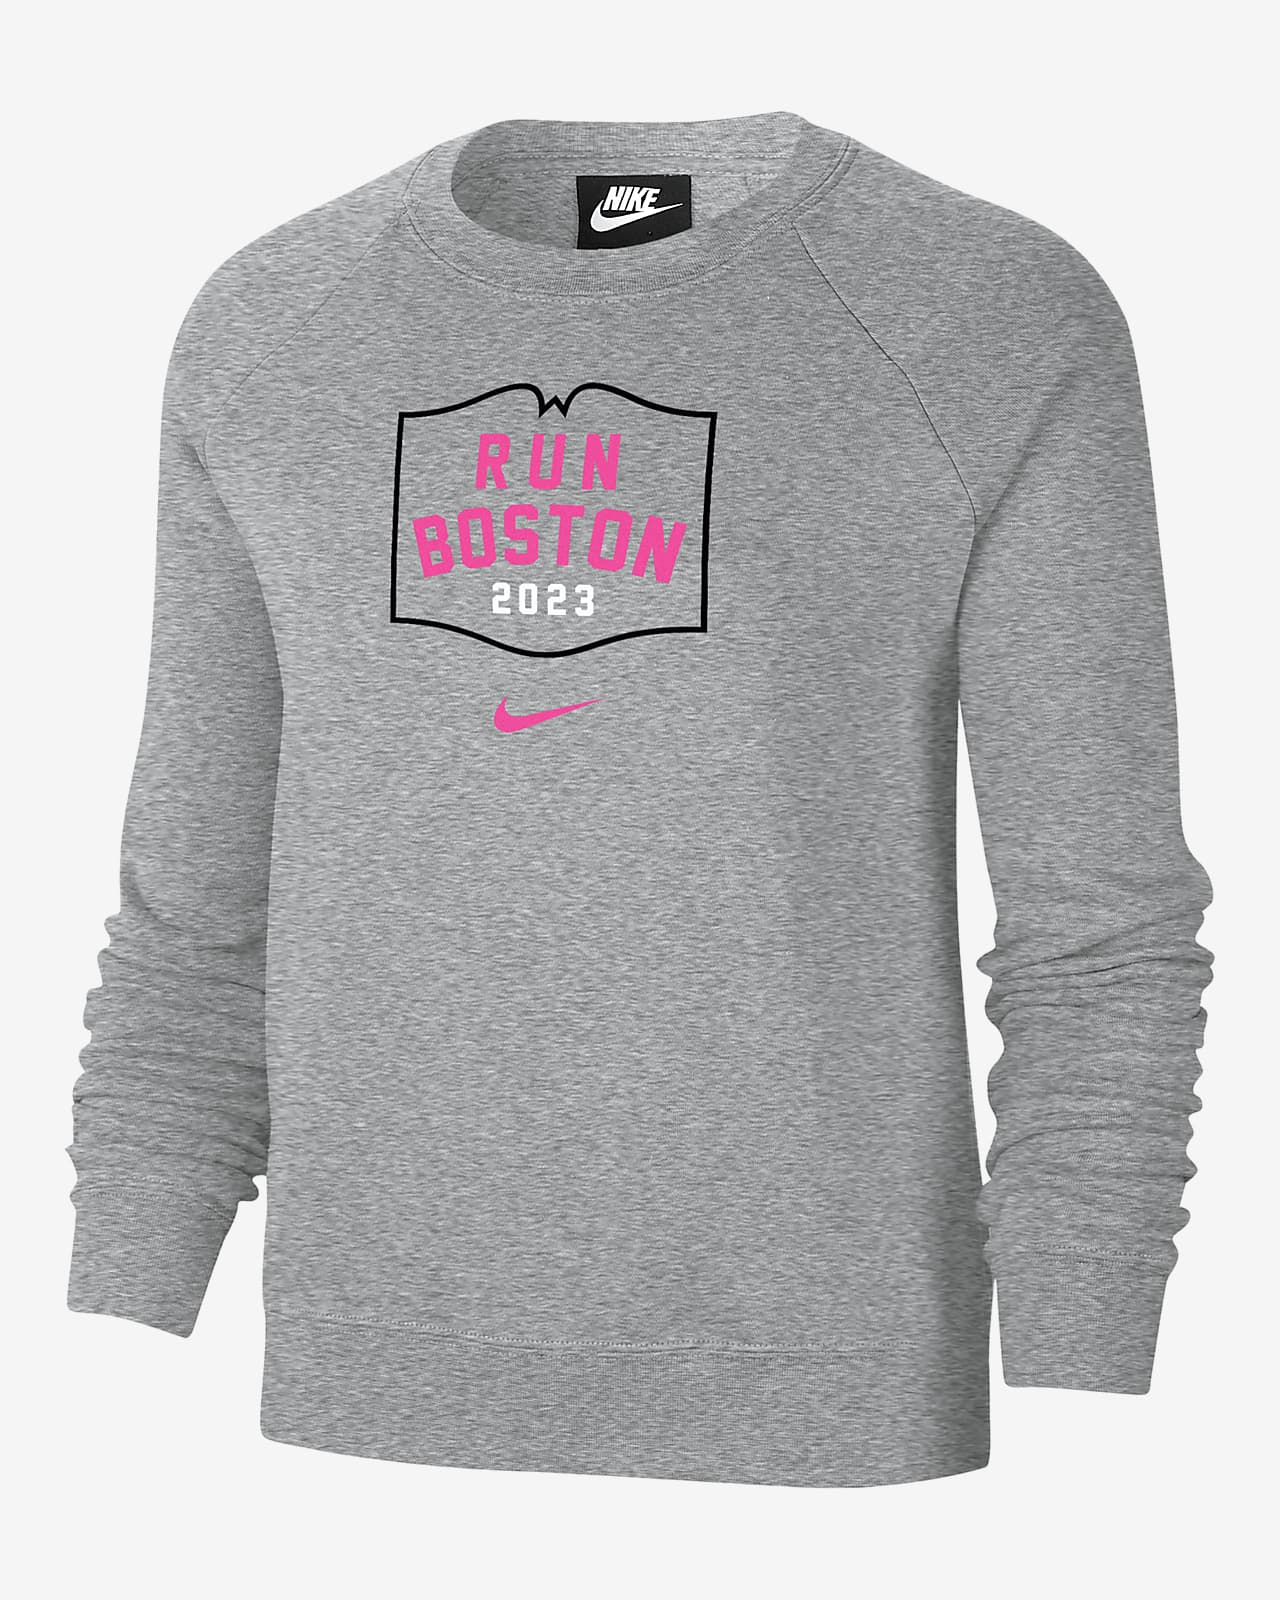 Nike Women's Crew-Neck Fleece Sweatshirt